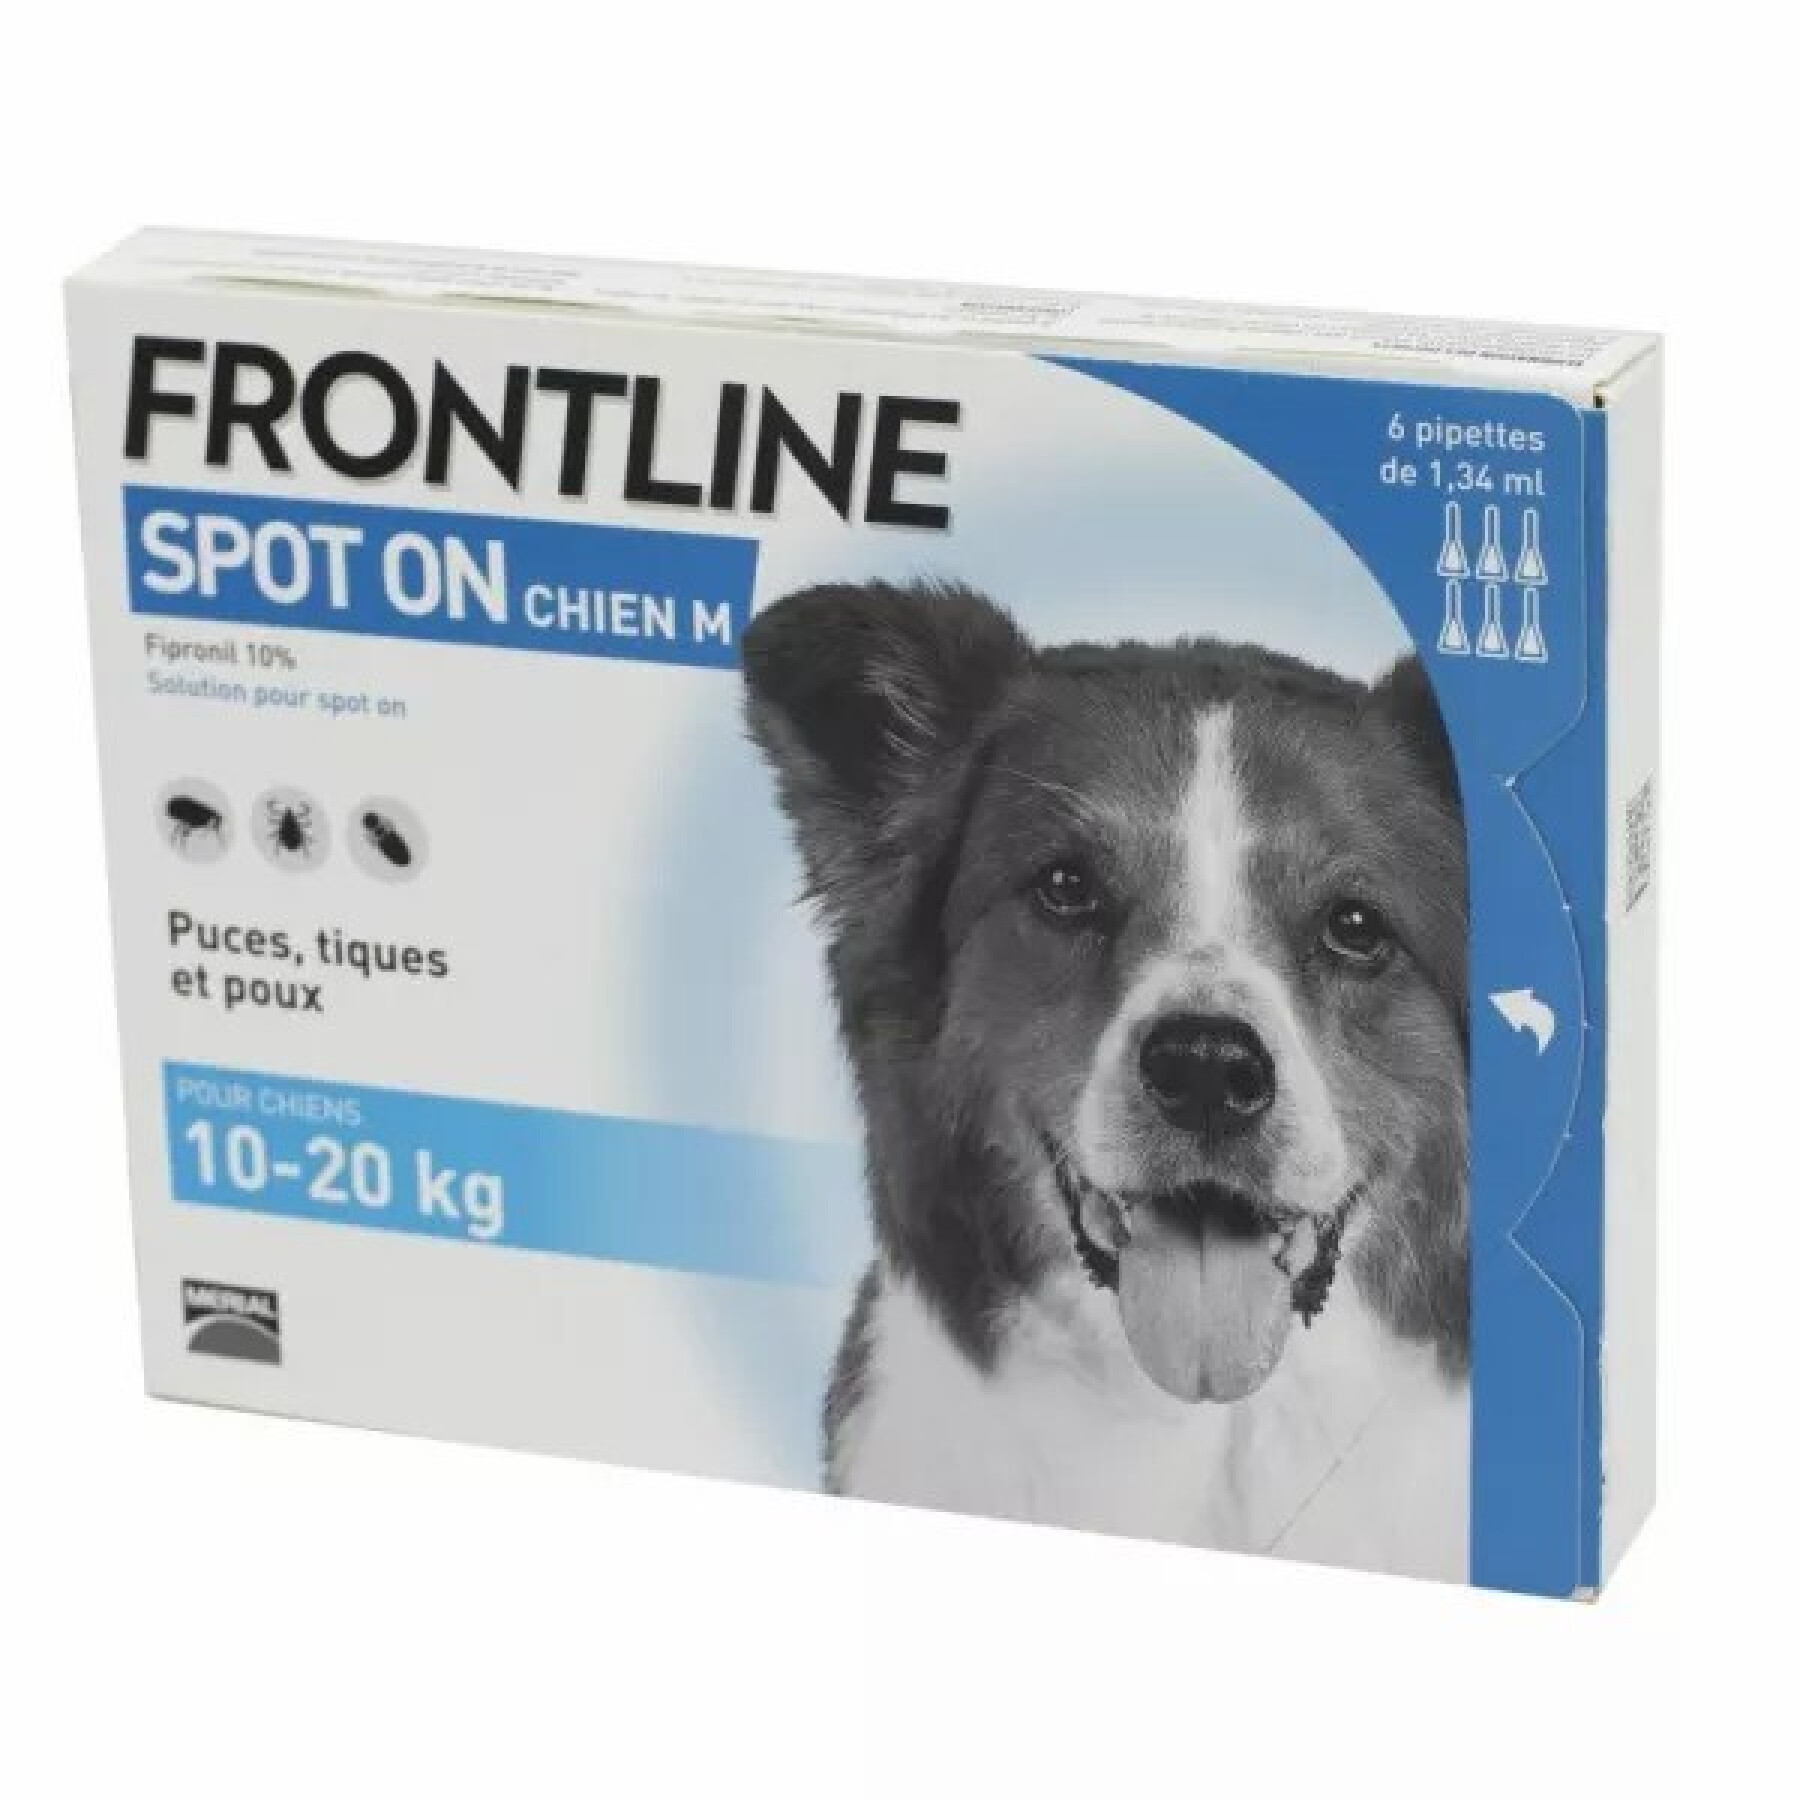 Pest control for dogs Frontline de10/20 kg Spot On (x6)